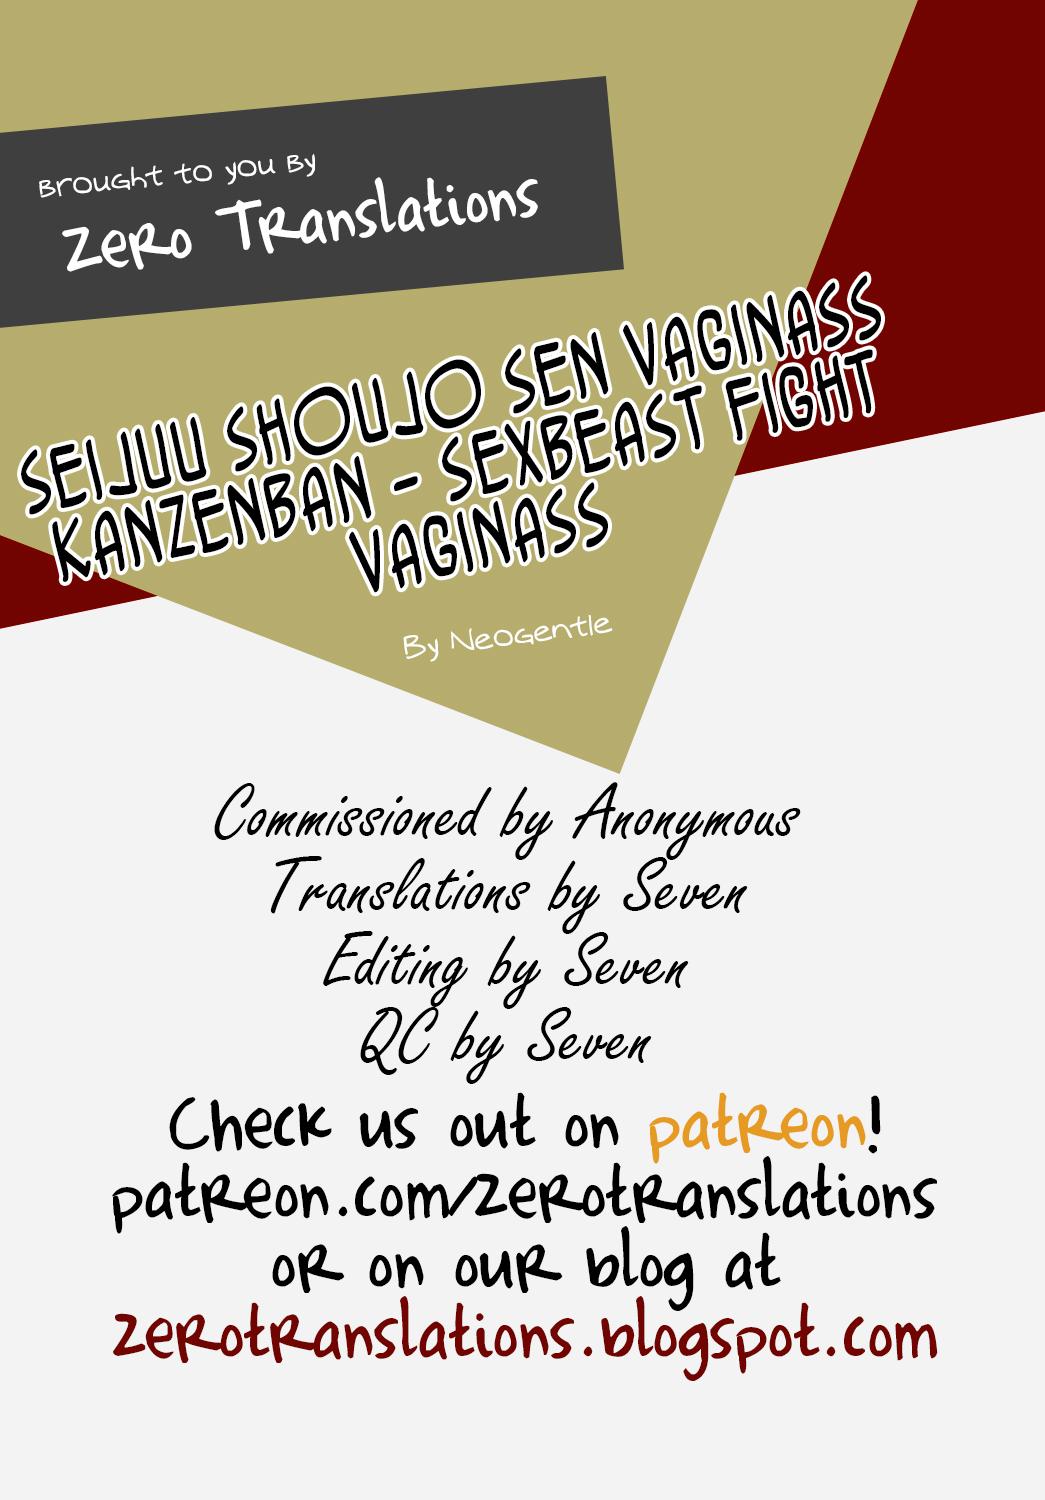 [Neo Gentle] Seijuu Shoujo Sen Vaginass Kanzenban - Sexbeast Fight Vaginass Ch. 1-3 [English] [Zero Translations] [Incomplete] 55